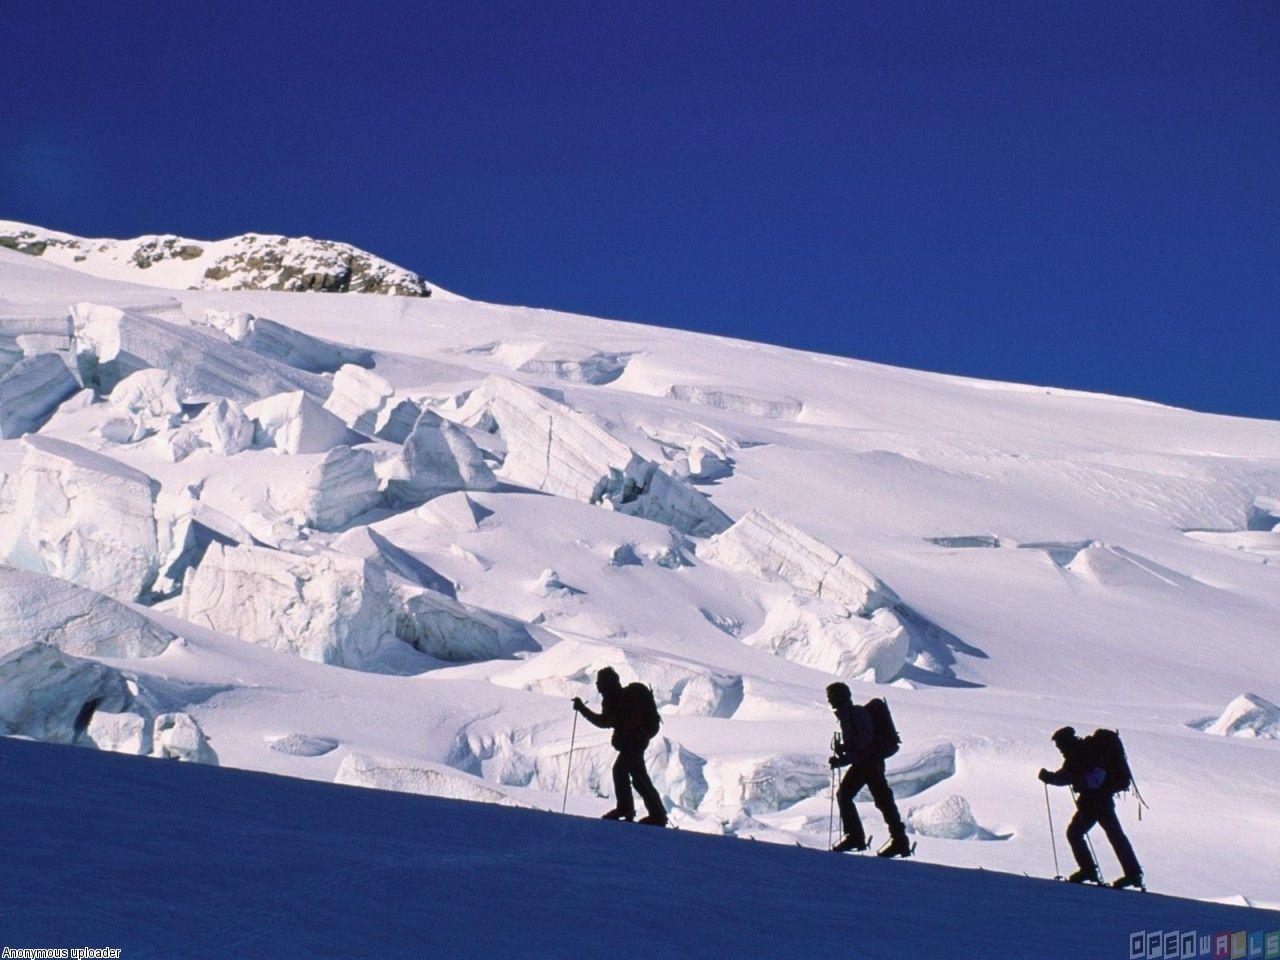 Climbers In The Mountains, (photo Blake Alvarado), MU 58